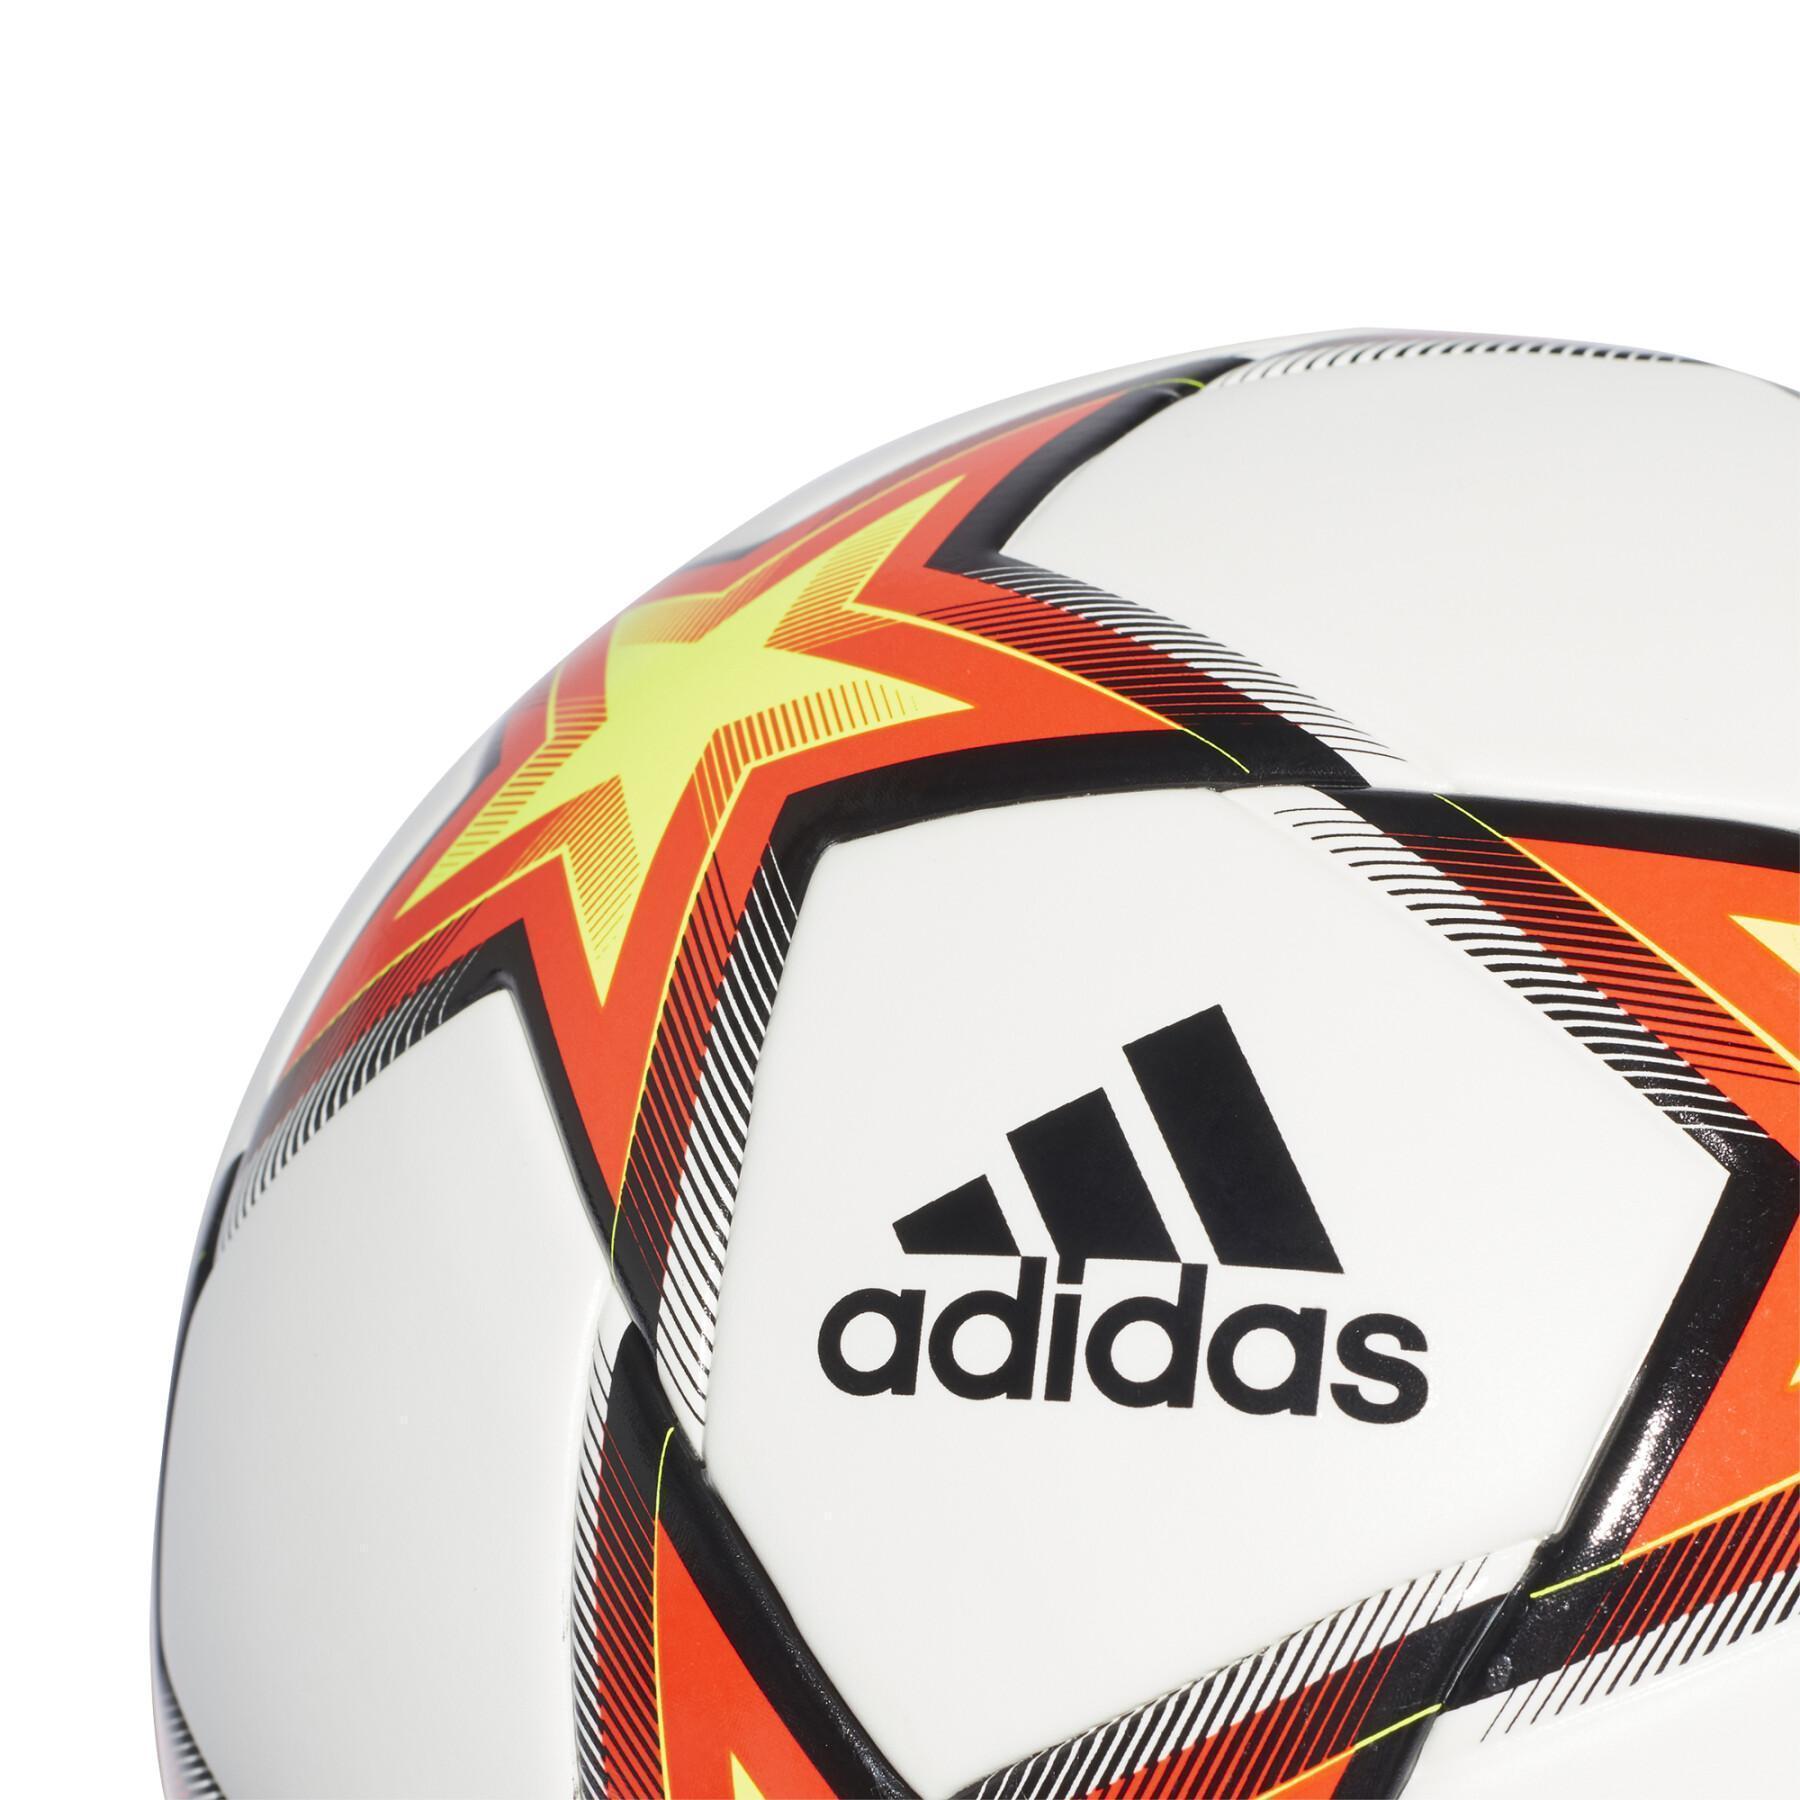 Pallone Champions League adidas League Pyrostorm